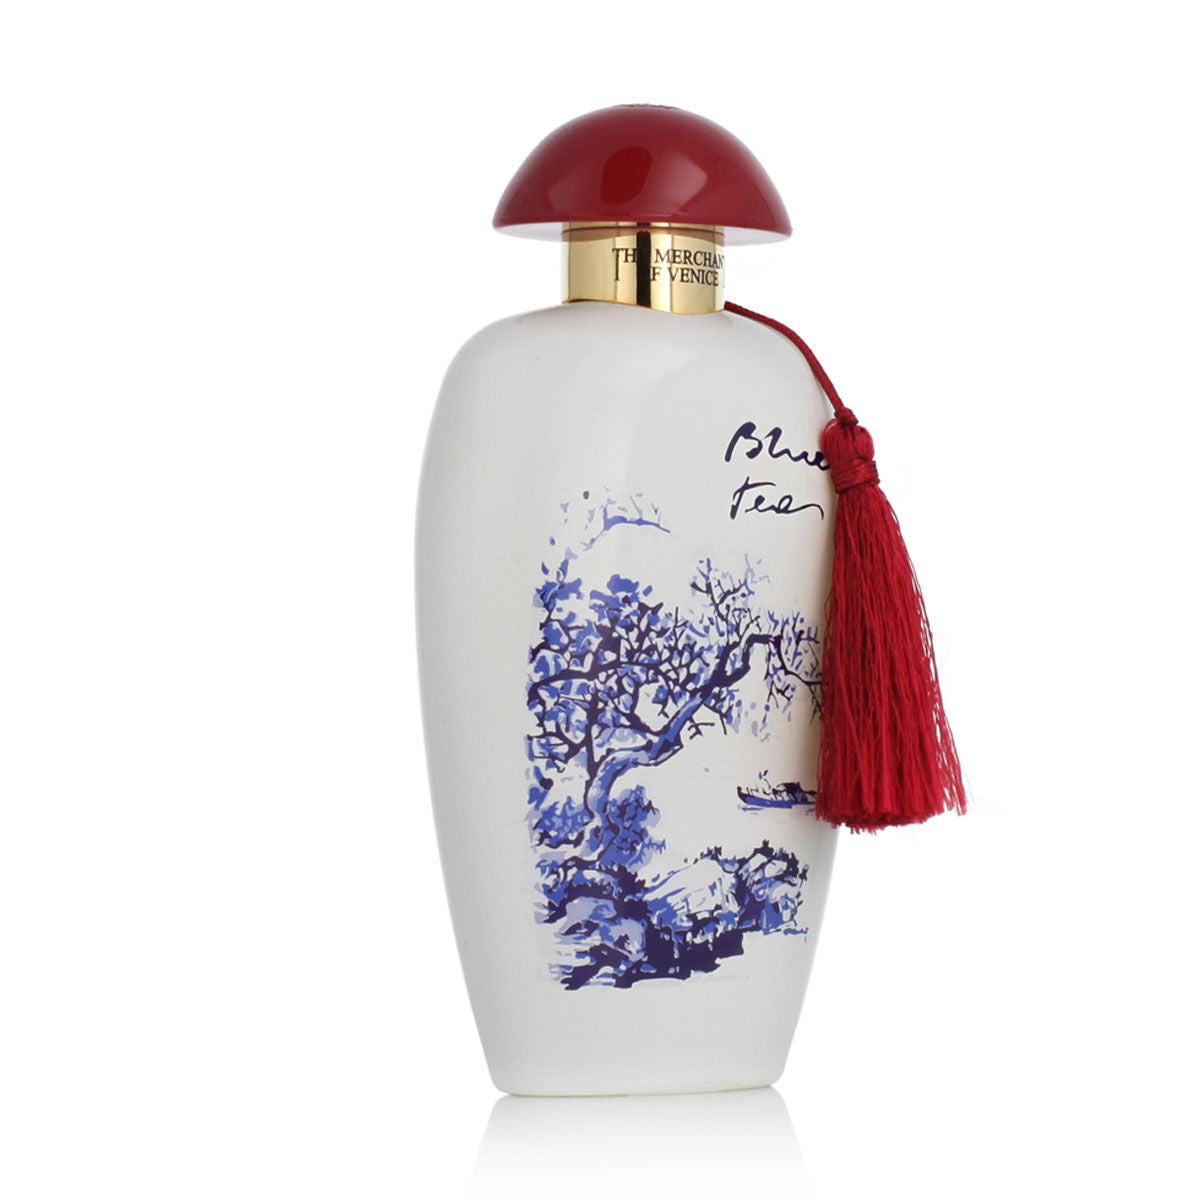 Uniseks Parfum The Merchant of Venice EDP Blue Tea 100 ml